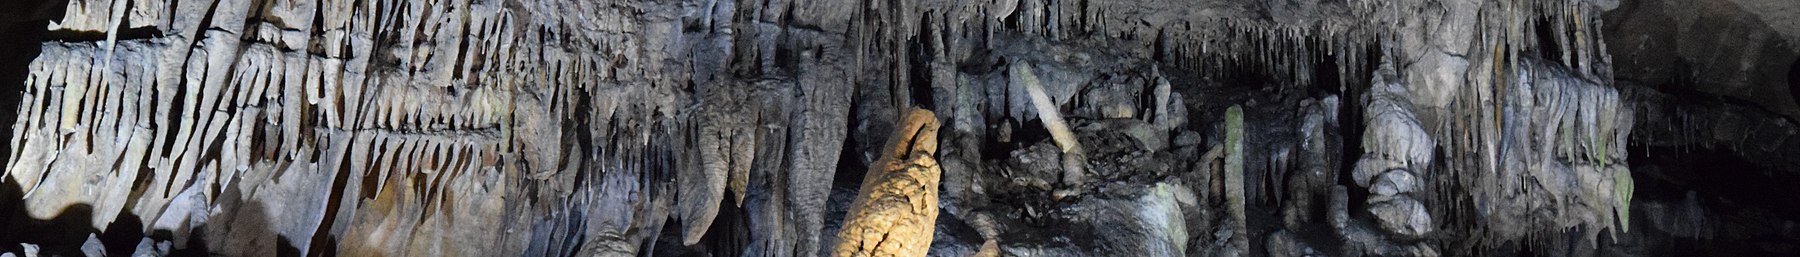 Пећине Хан 003 пагебаннер.јпг